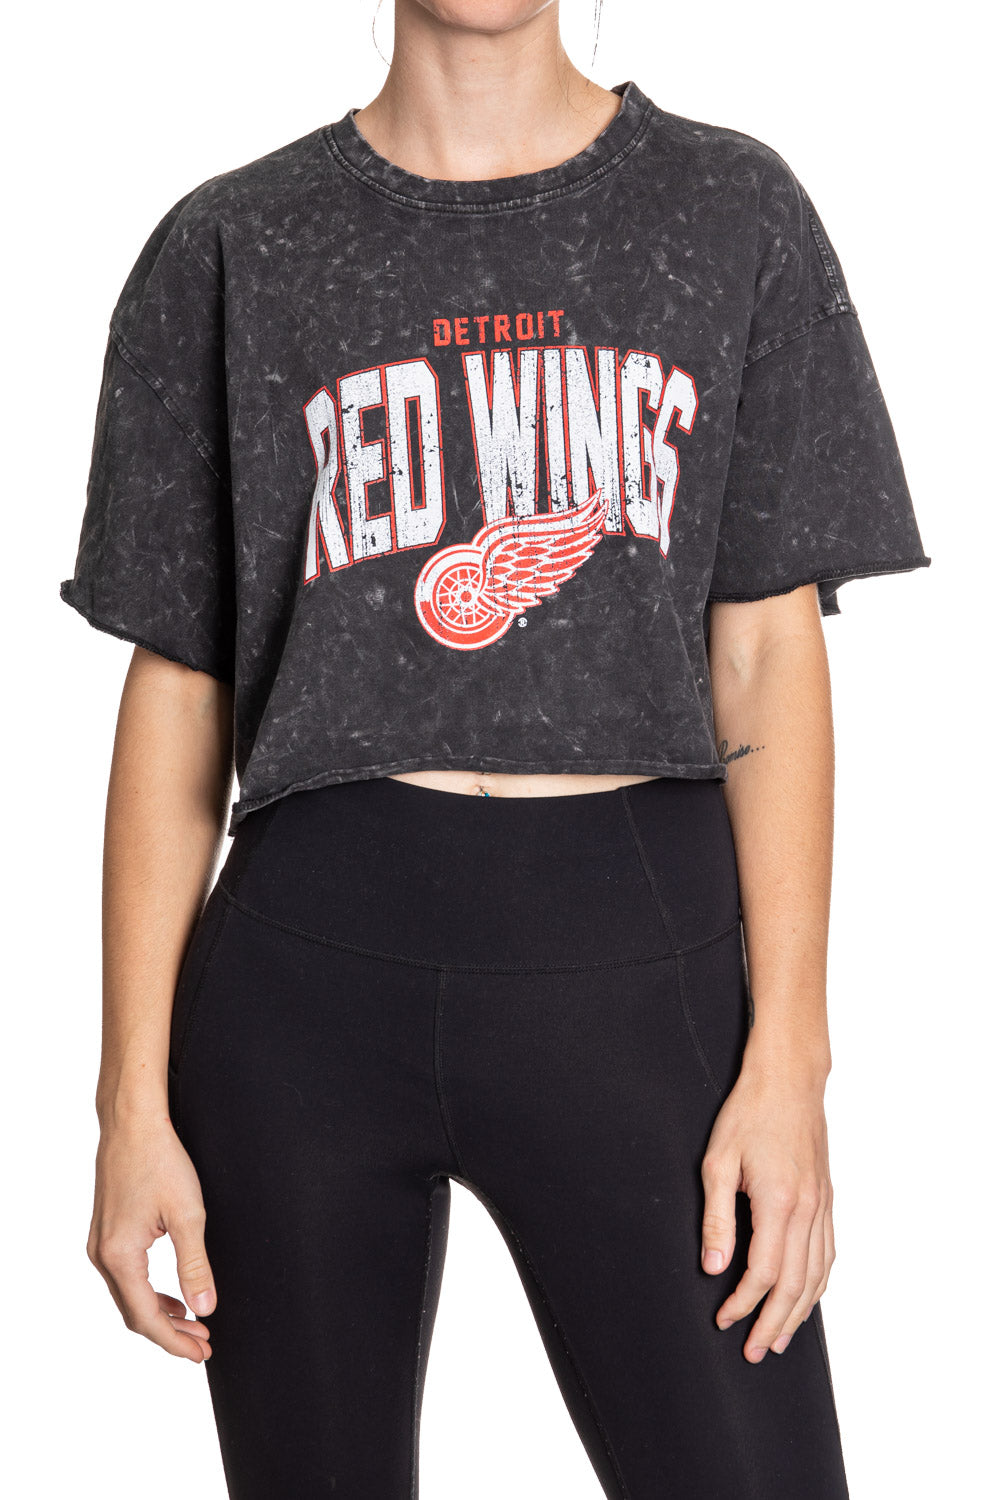 Skeleton detroit red wings player hockey wall shirt - Teefefe